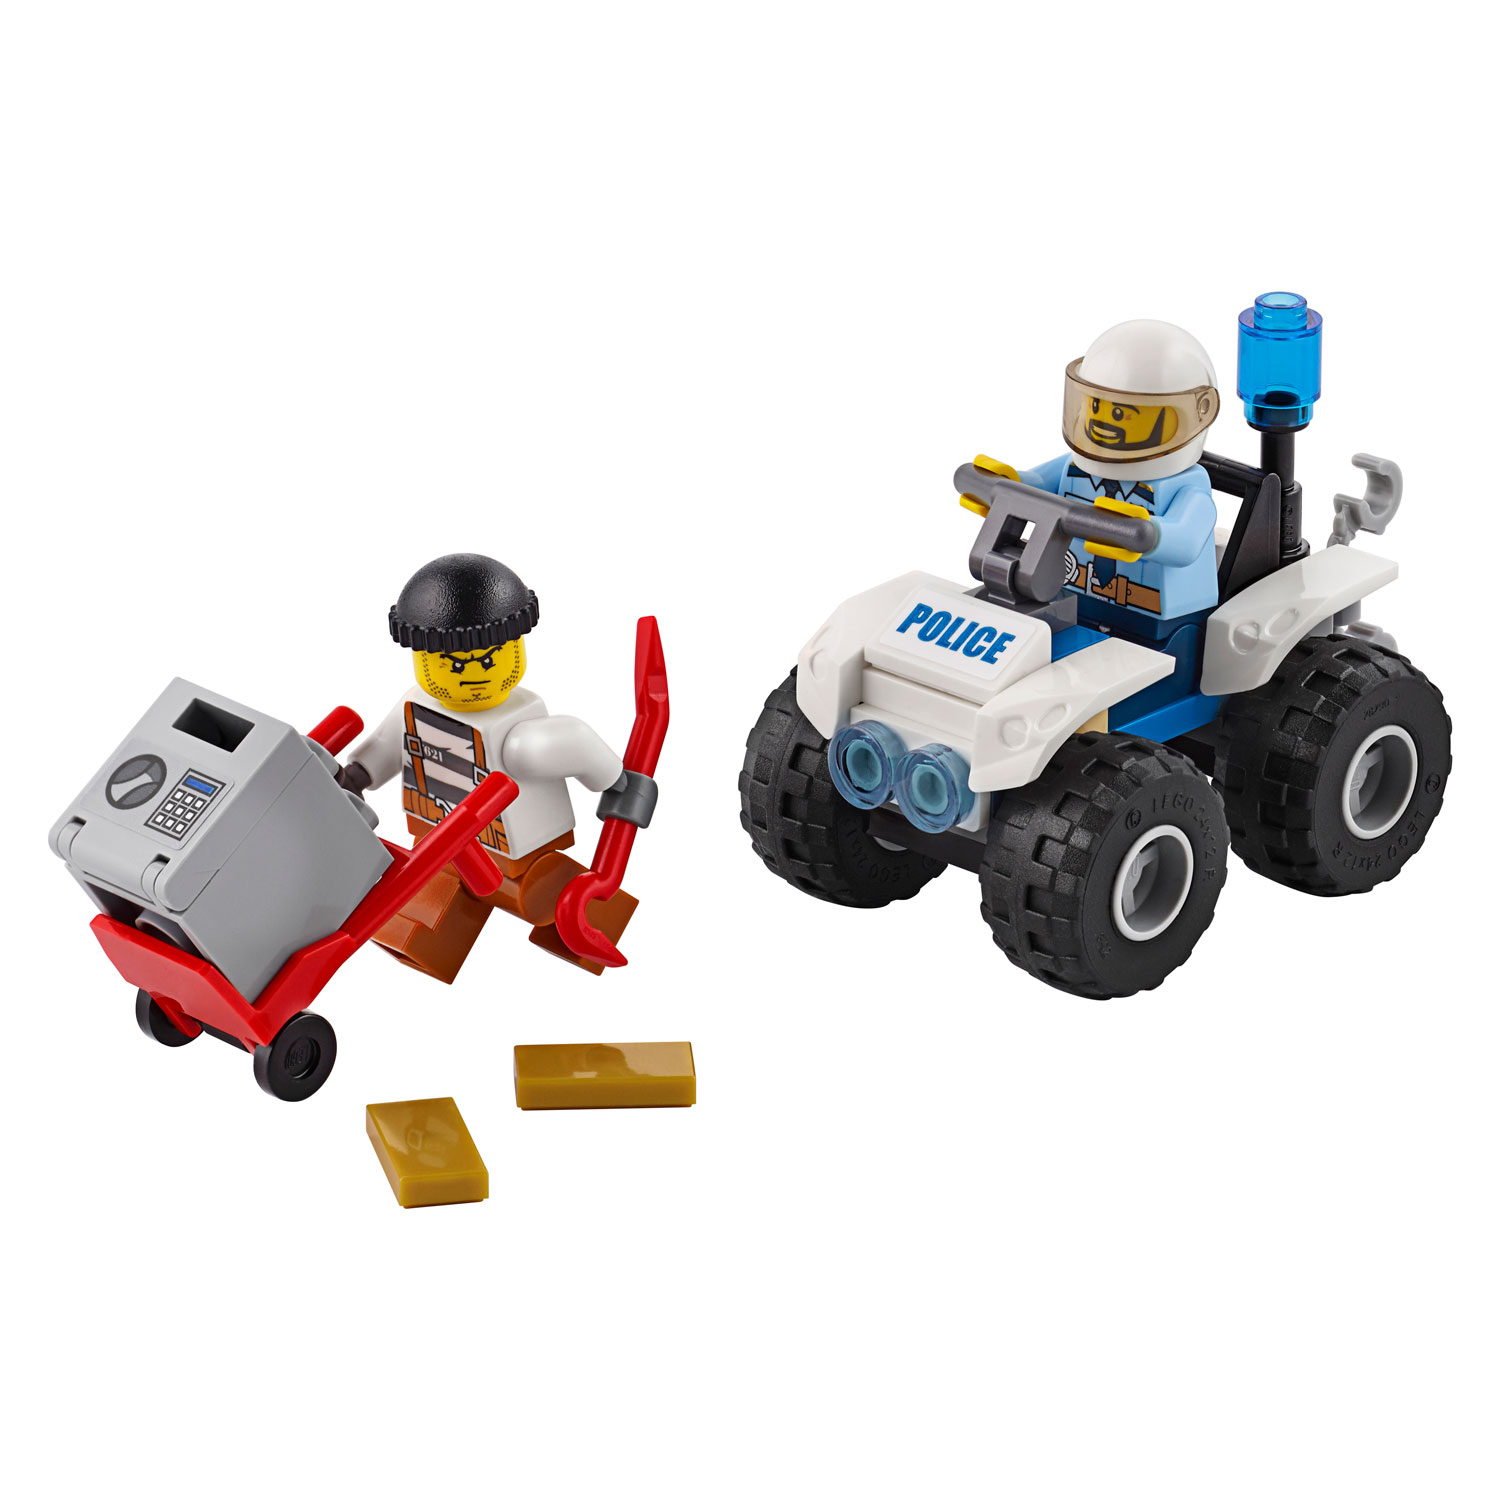 LEGO City 60135 ATV Arrestatie